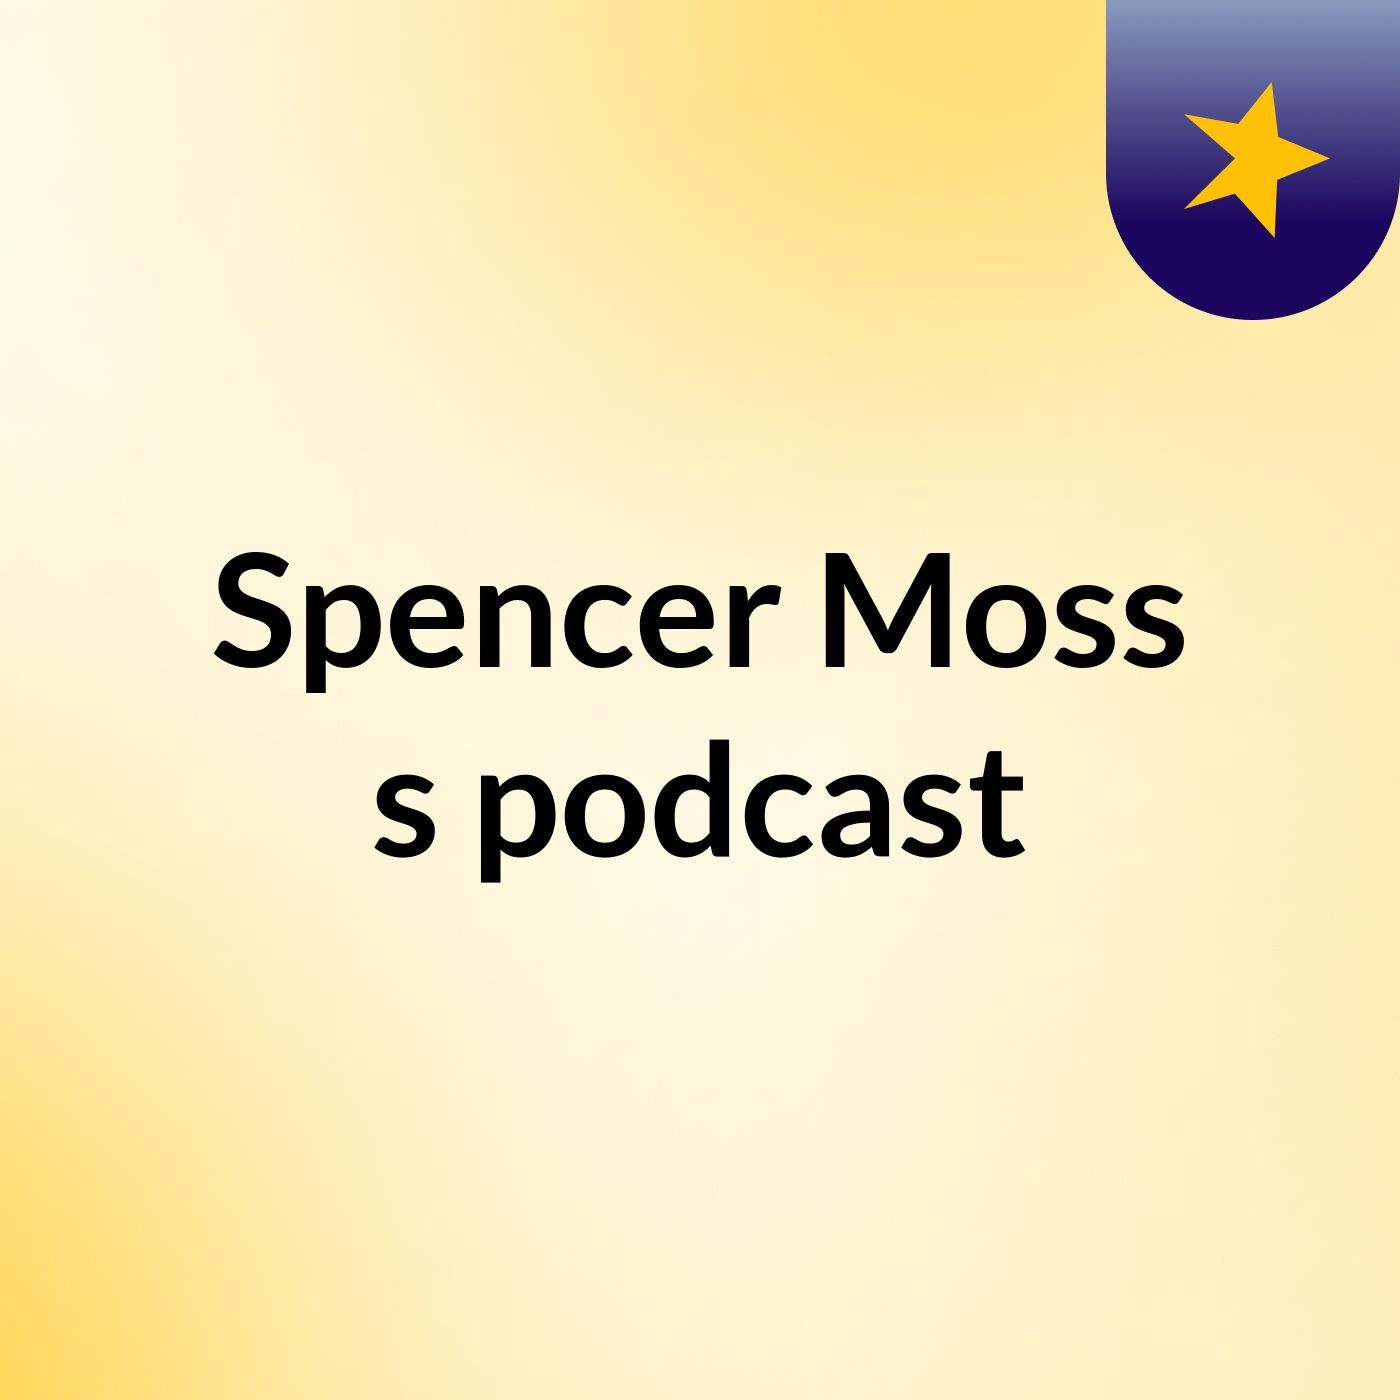 Episode 3 - Spencer Moss's podcast